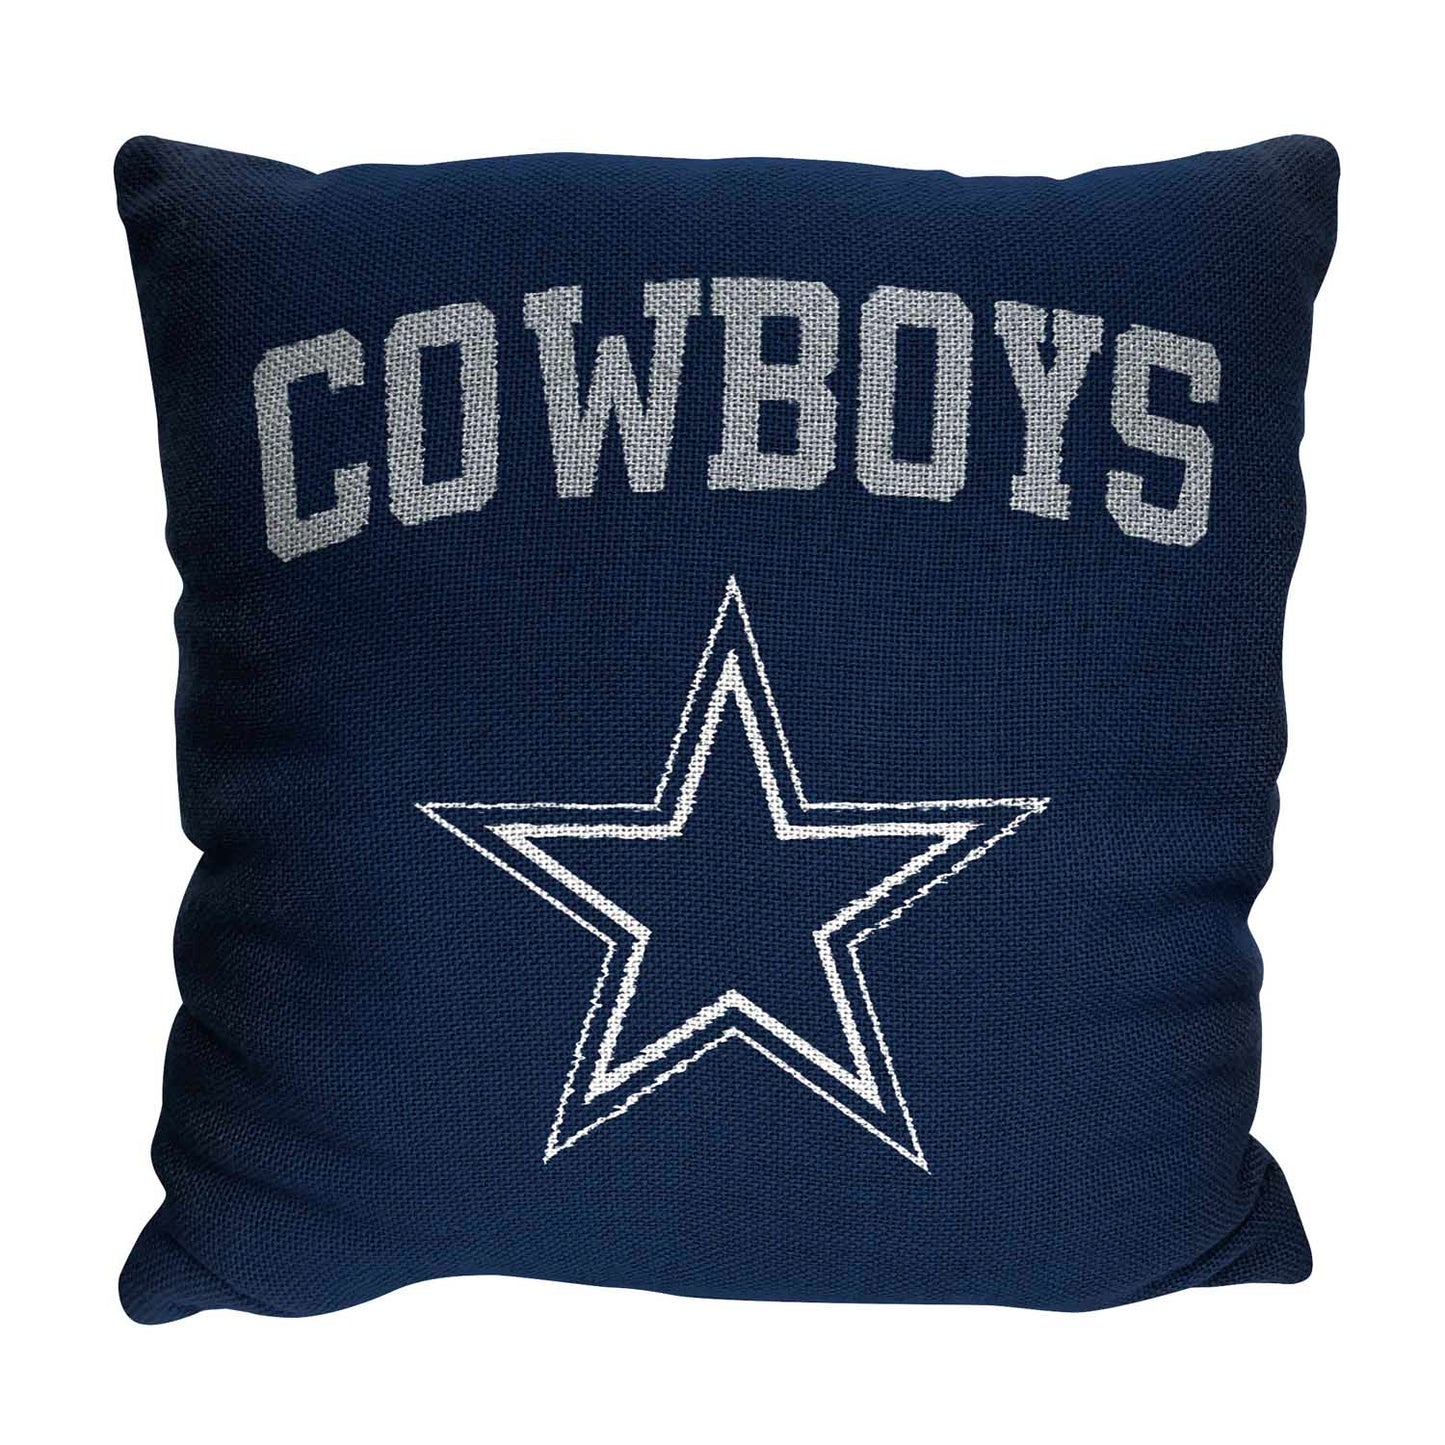 Dallas Cowboys NFL Decorative Football Throw Pillow - Navy